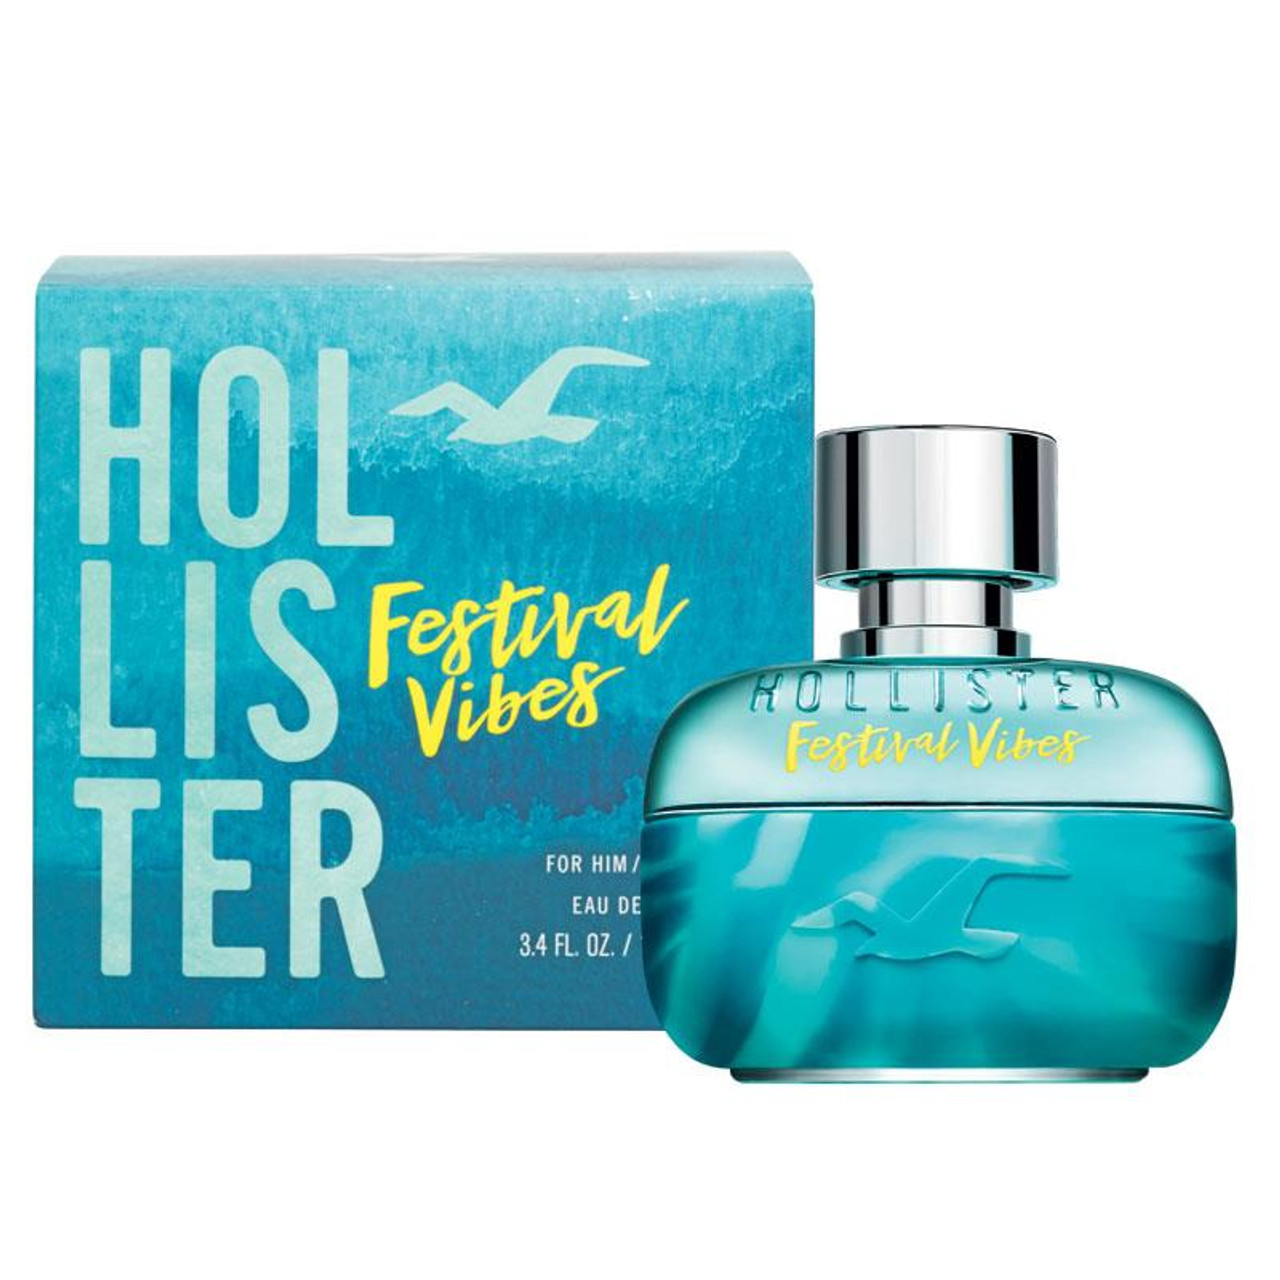 hollister perfume festival vibes